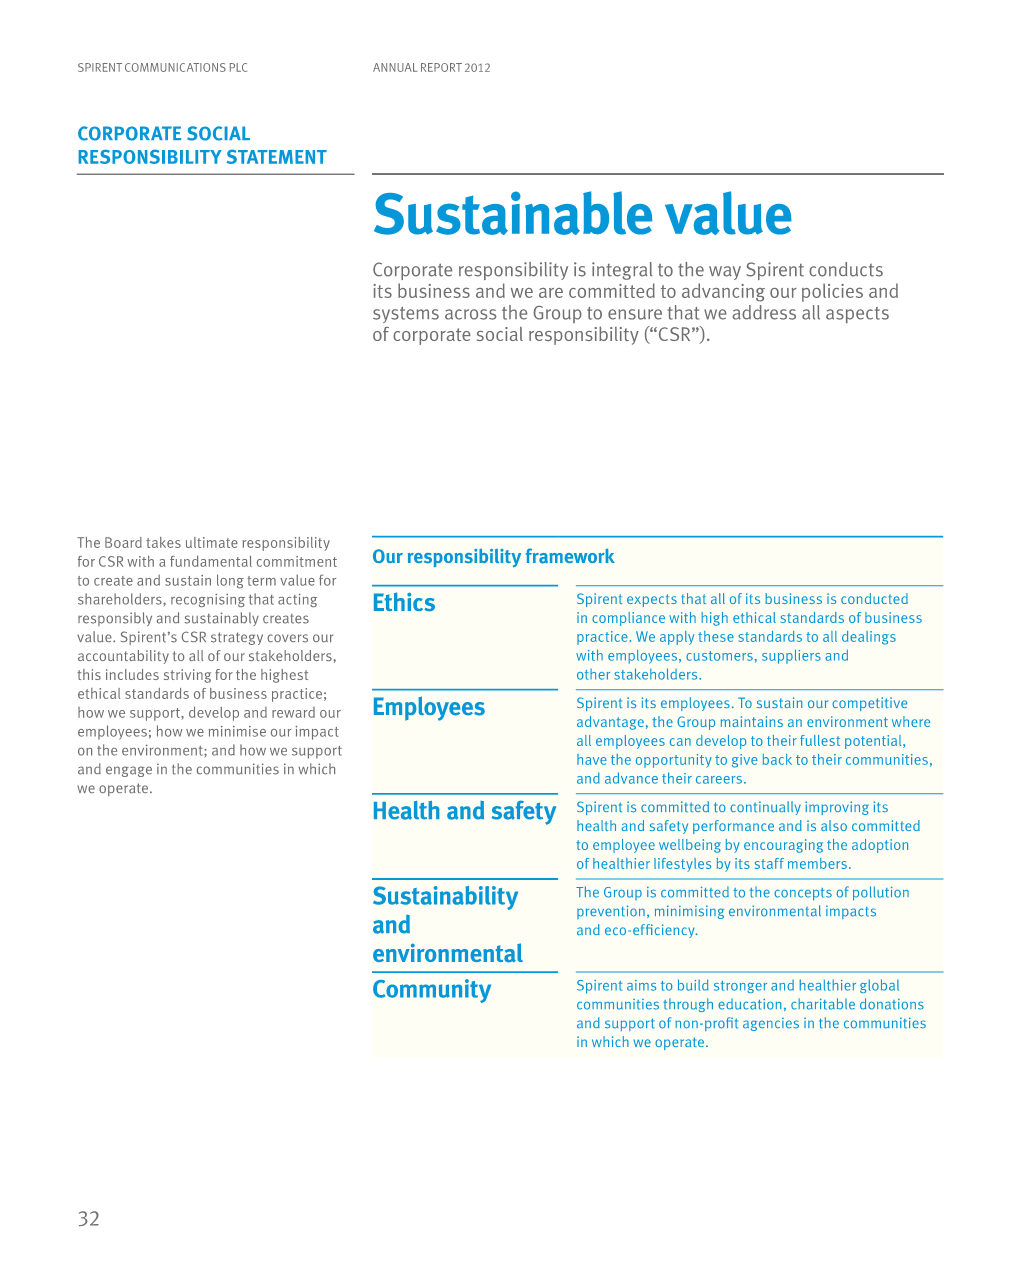 Sustainable Value